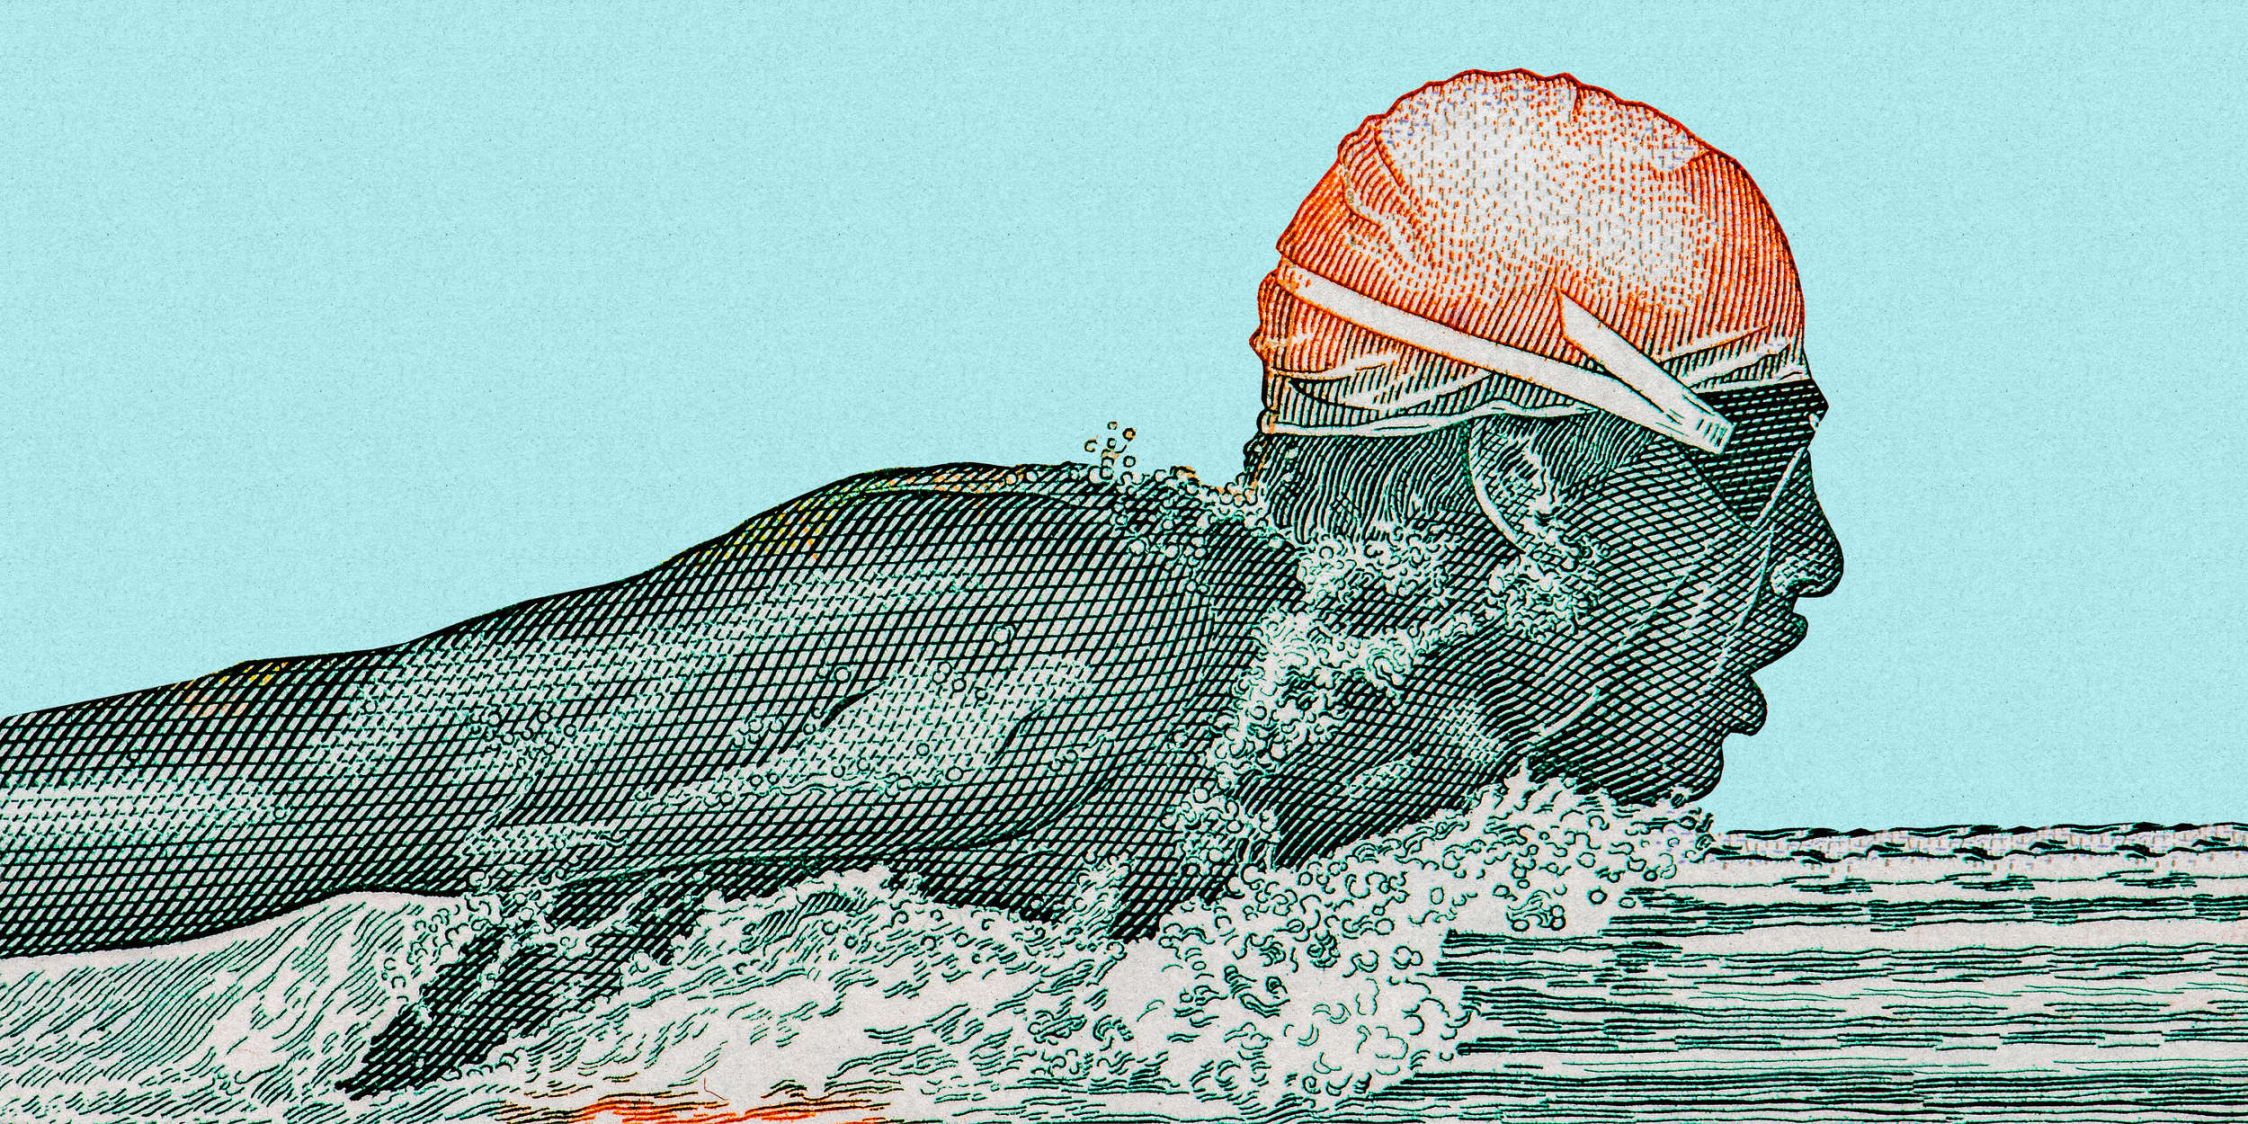             Digital behang »aquaman« - zwemmer in pixeldesign - petrol met kraftpapiertextuur | Gladde, licht parelmoerglanzende vliesstof
        